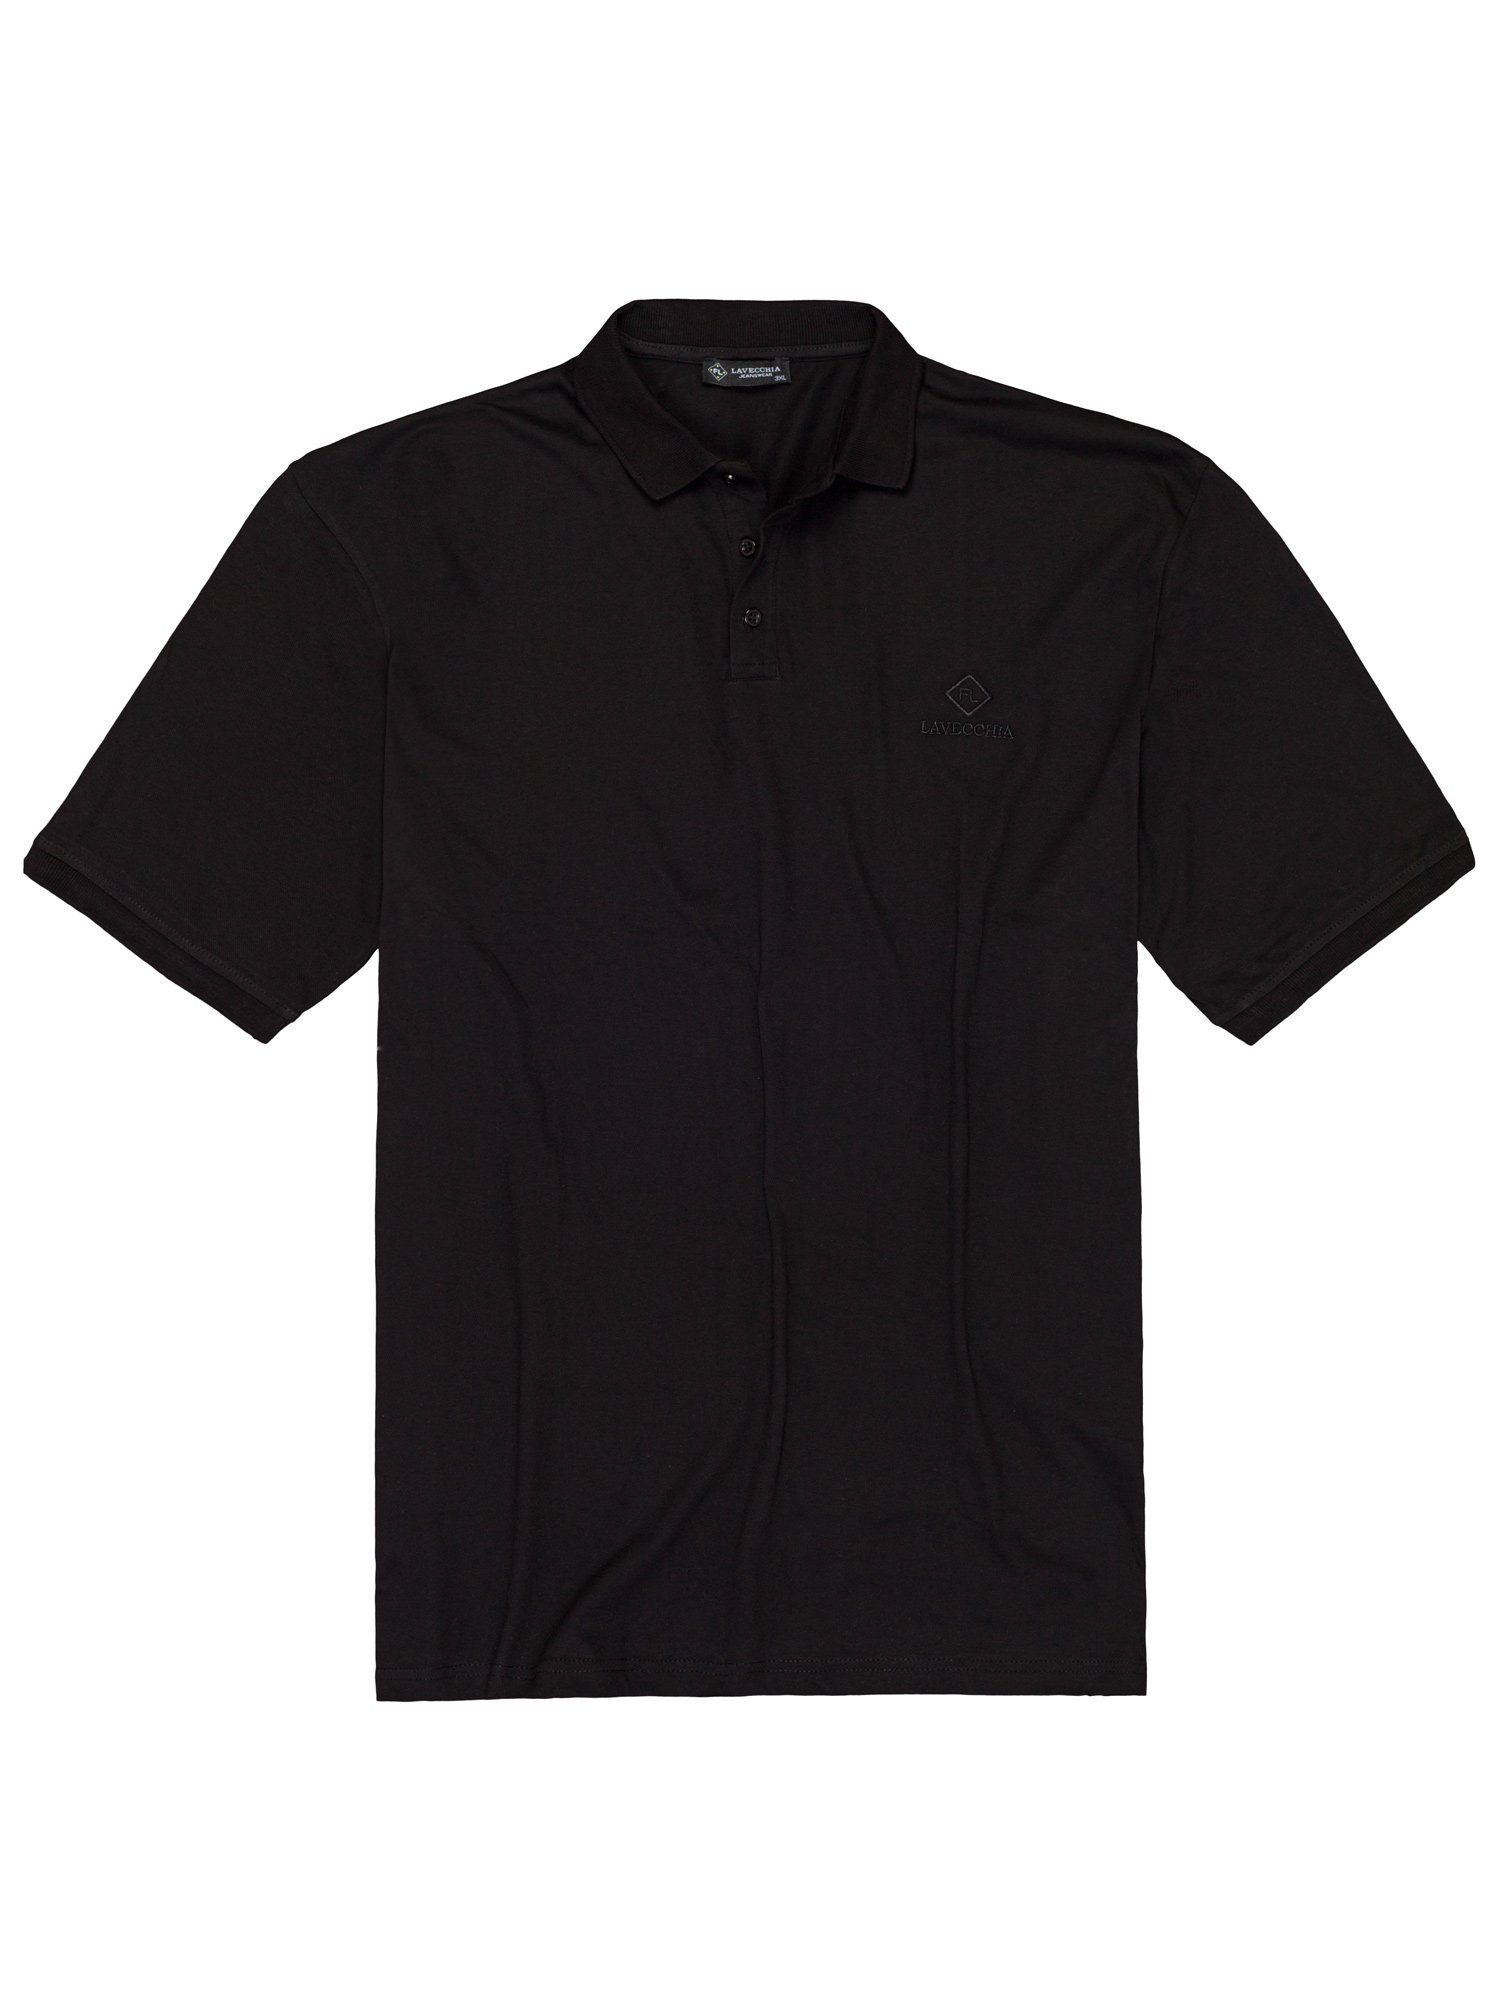 Polo Herren Übergrößen schwarz LV-1000 Shirt Lavecchia Poloshirt